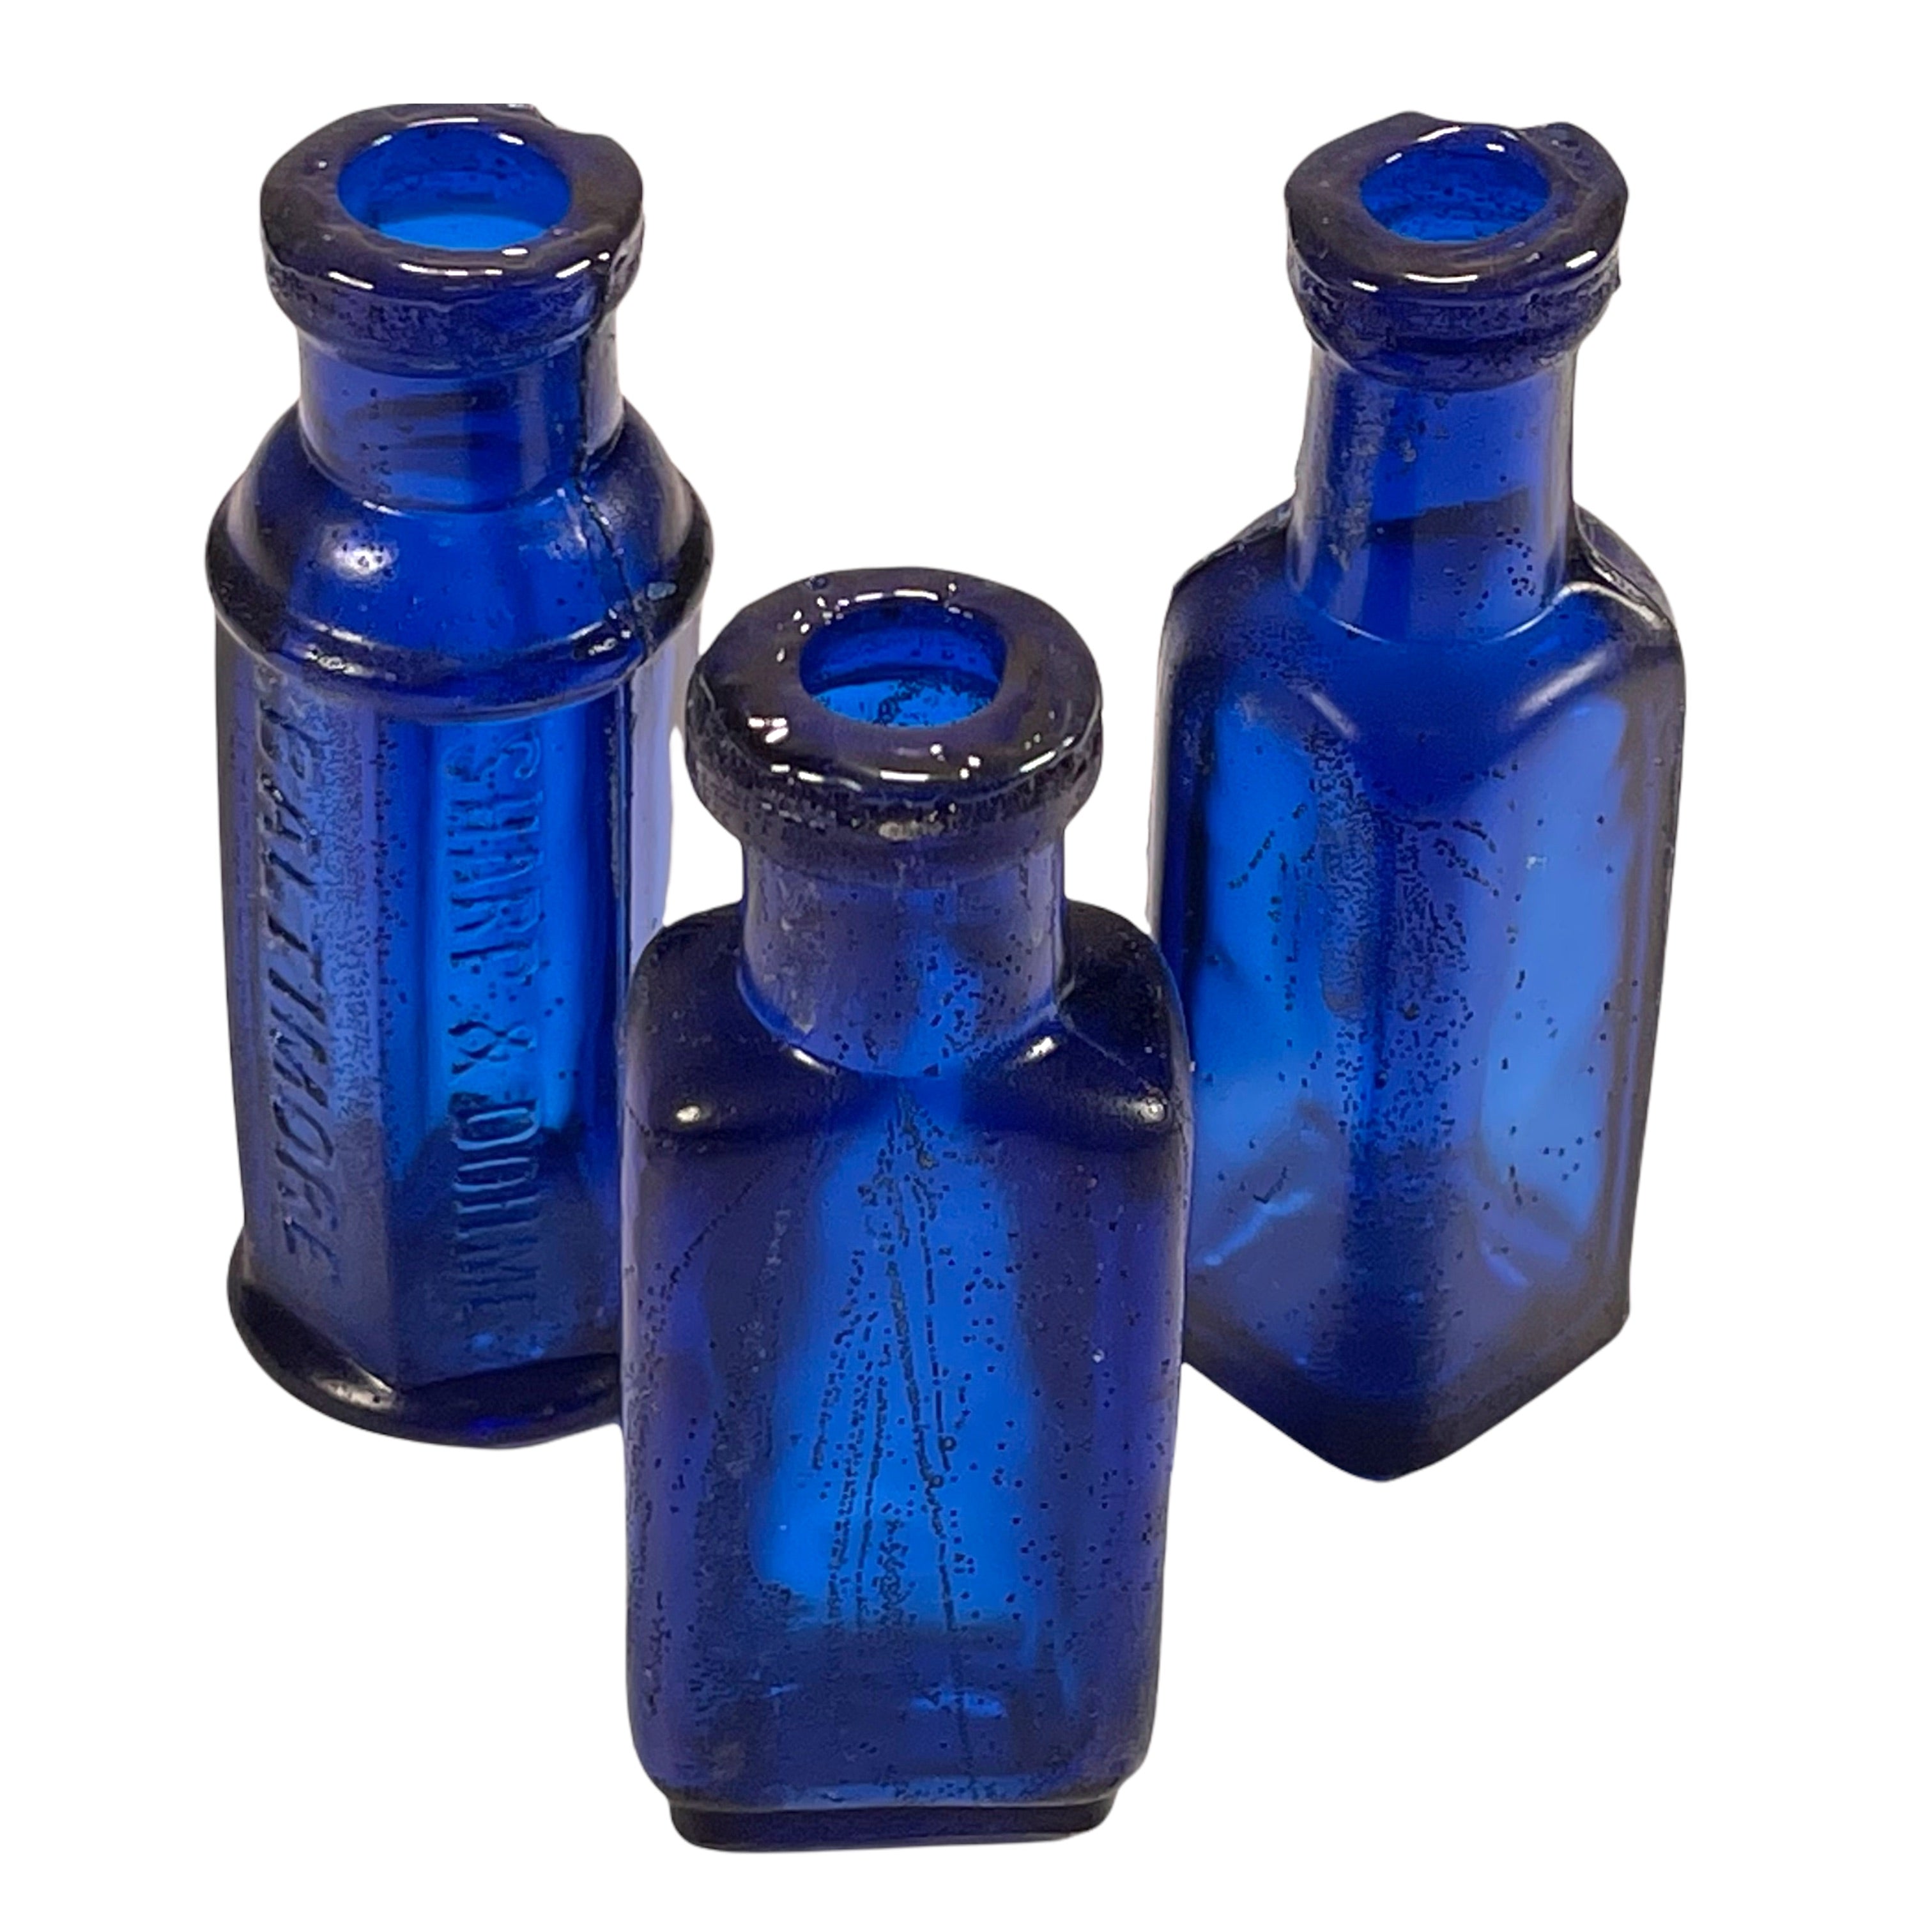 SMASHProps Breakaway Mini Poison Bottle Prop Set 3 Pieces - COBALT BLUE translucent - Cobalt Blue Translucent